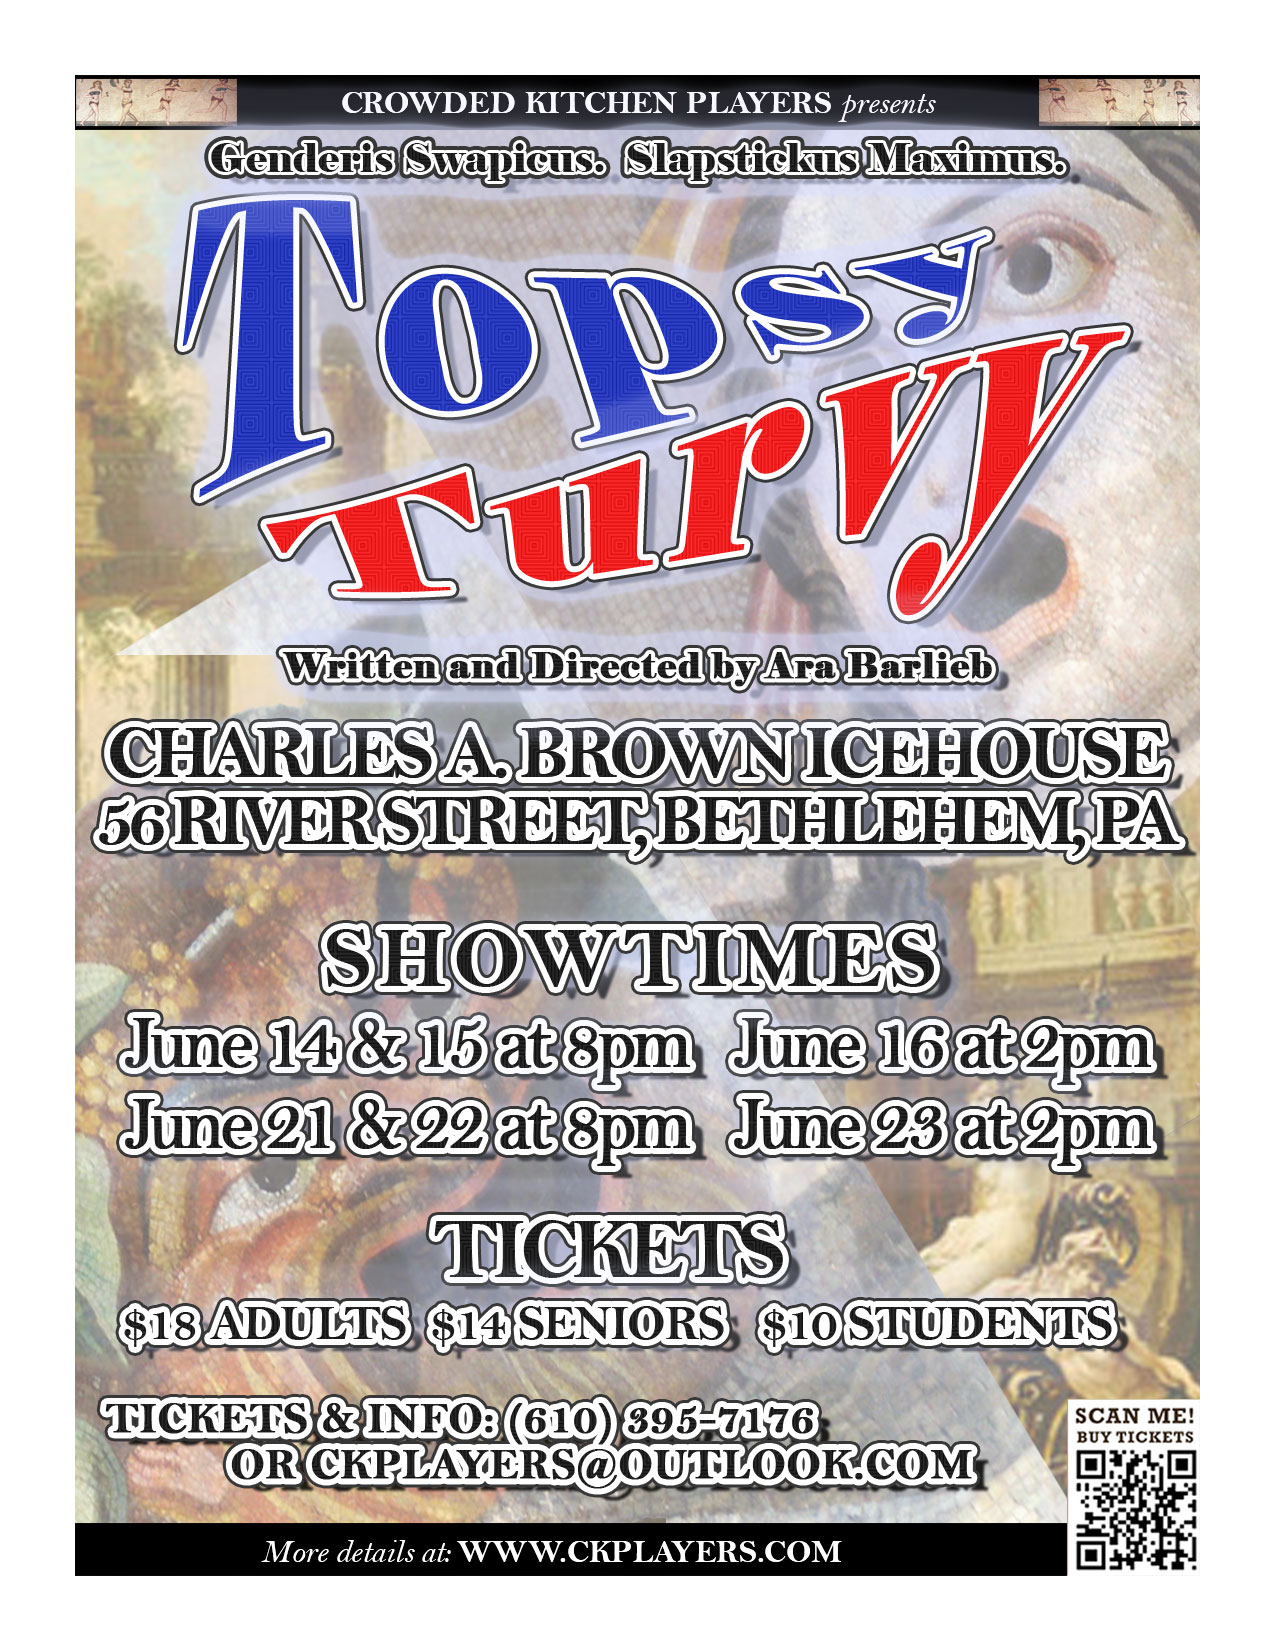 Topsy-Turvy (2000) Main Poster